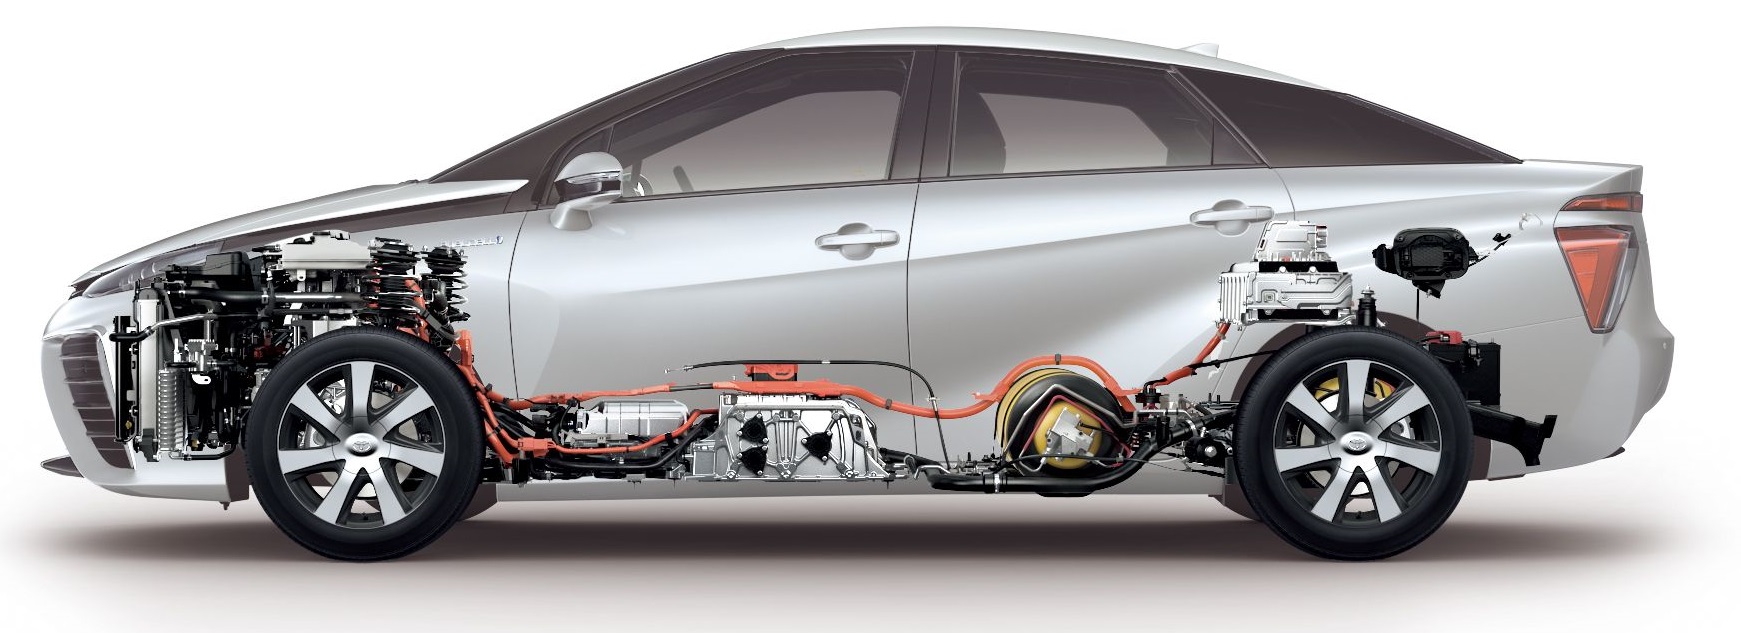 Toyota Mirai fuel cell vehicle